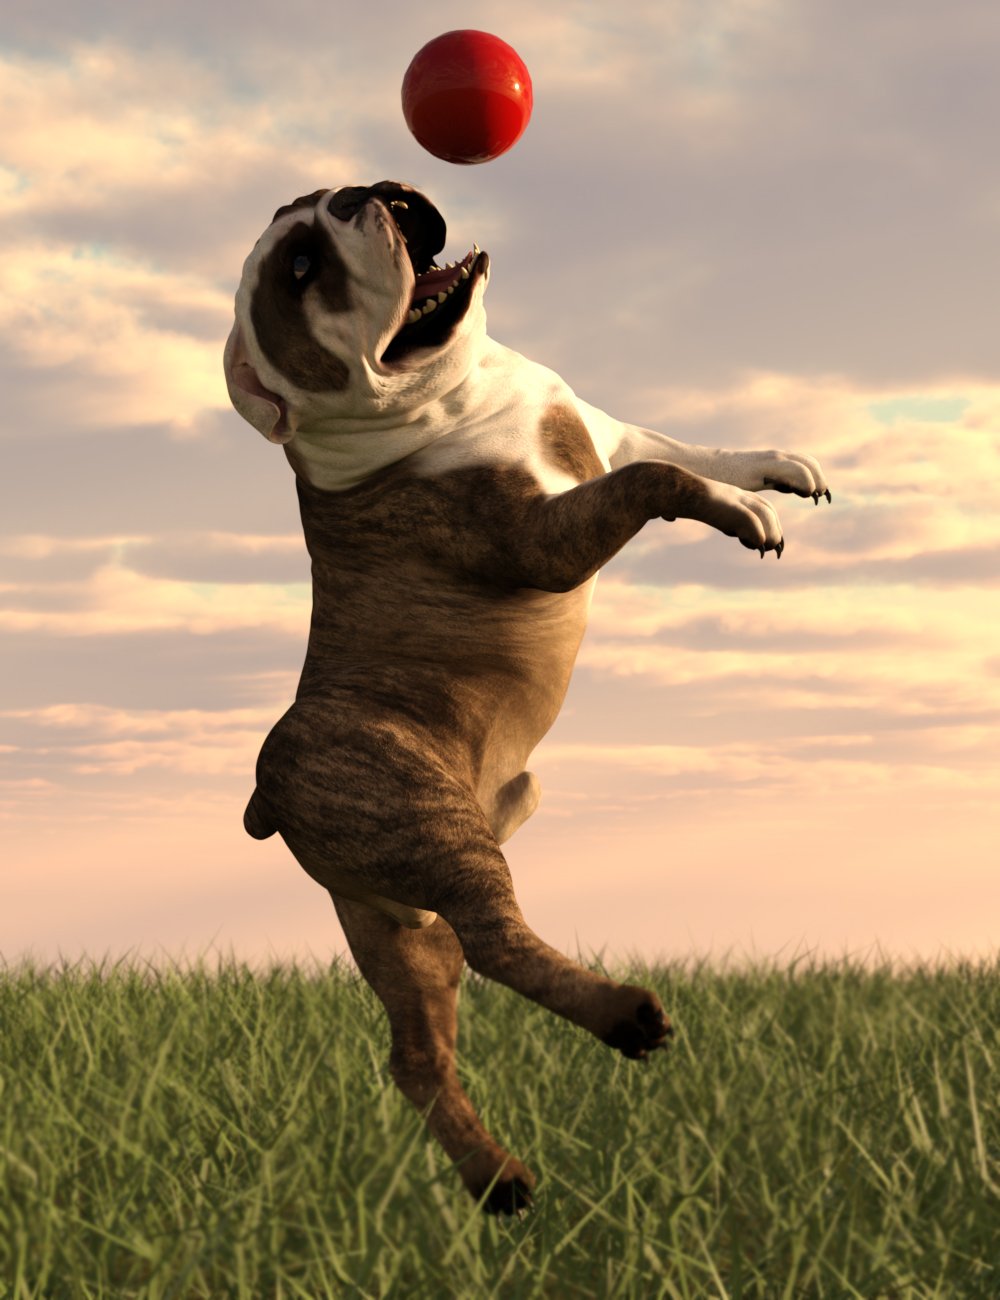 Bulldog Poses For English Bulldog by: Ensary, 3D Models by Daz 3D